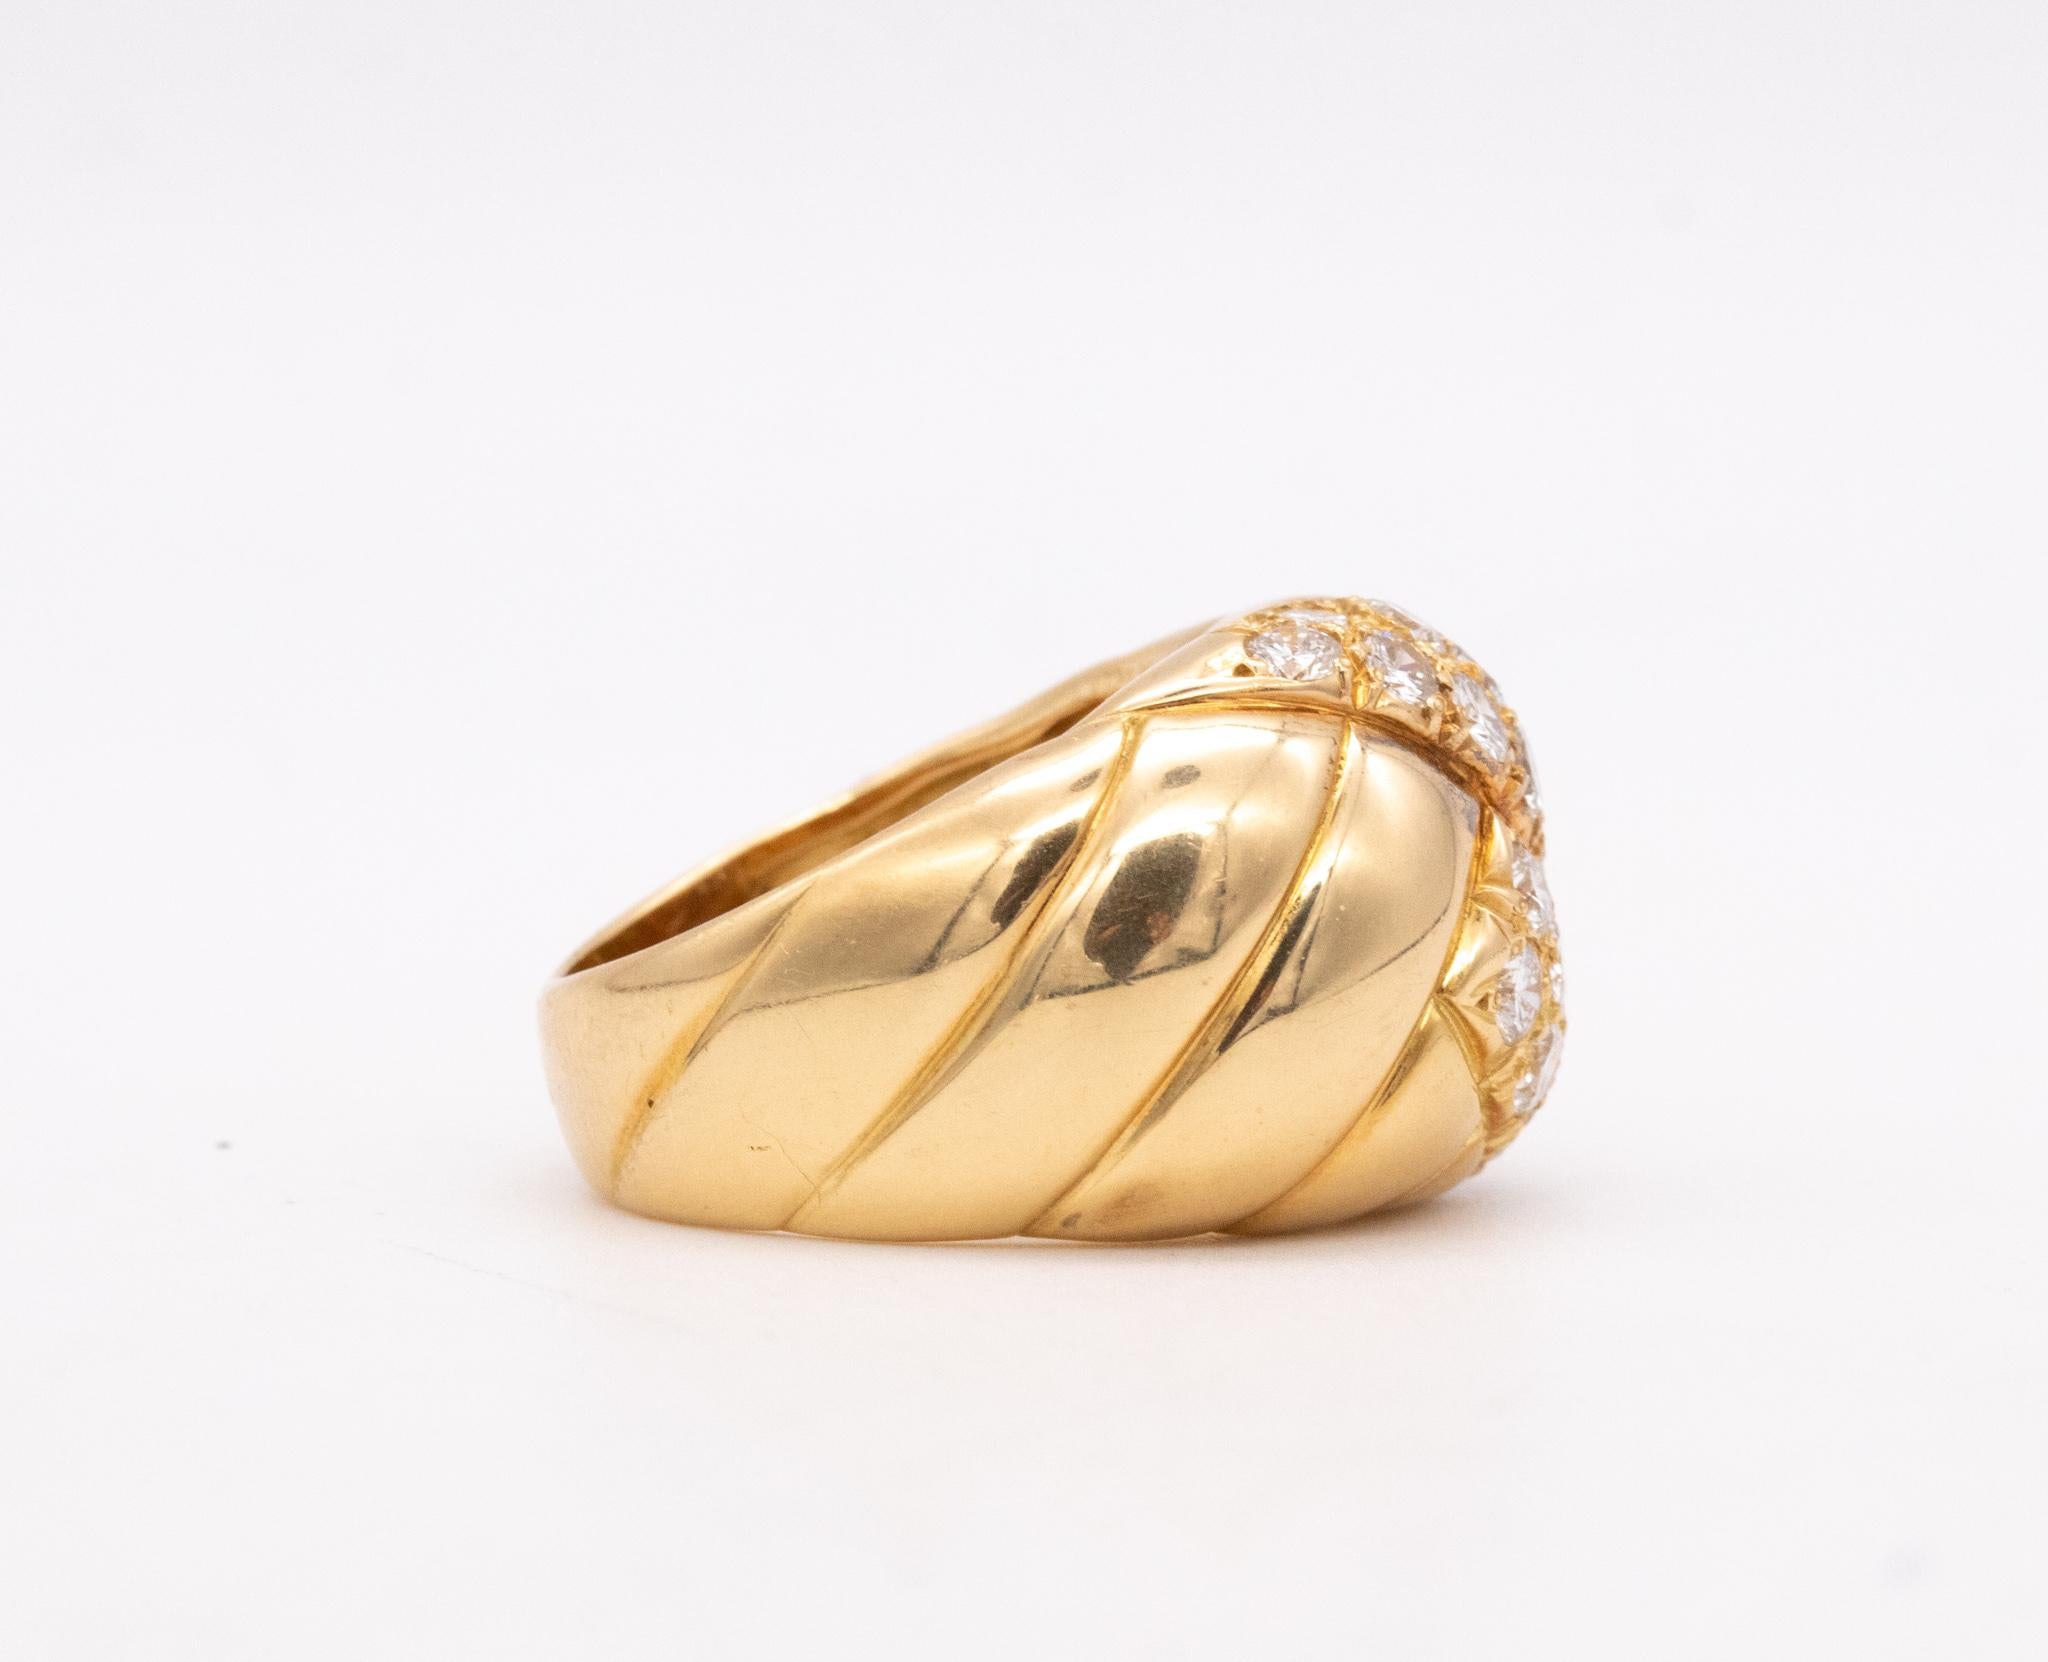 Women's Van Cleef Arpels 1970 Paris Bombe Cocktail Ring 18Kt Gold 1.26 Cts VVS Diamonds For Sale